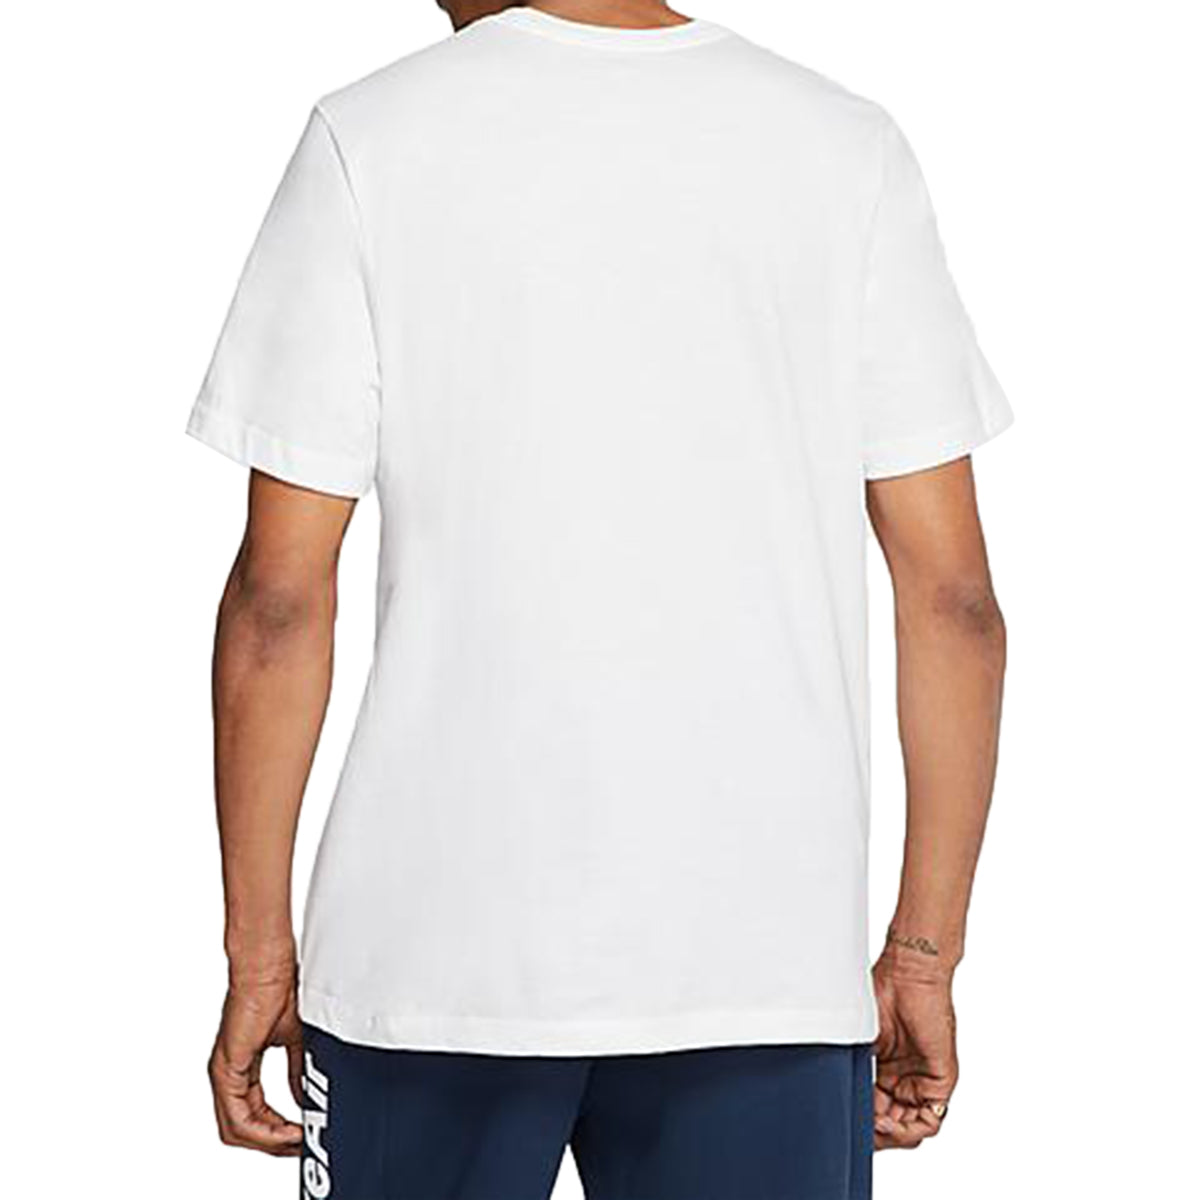 Nike Sportswear Staten Island Template T-shirt Mens Style : Cw4697